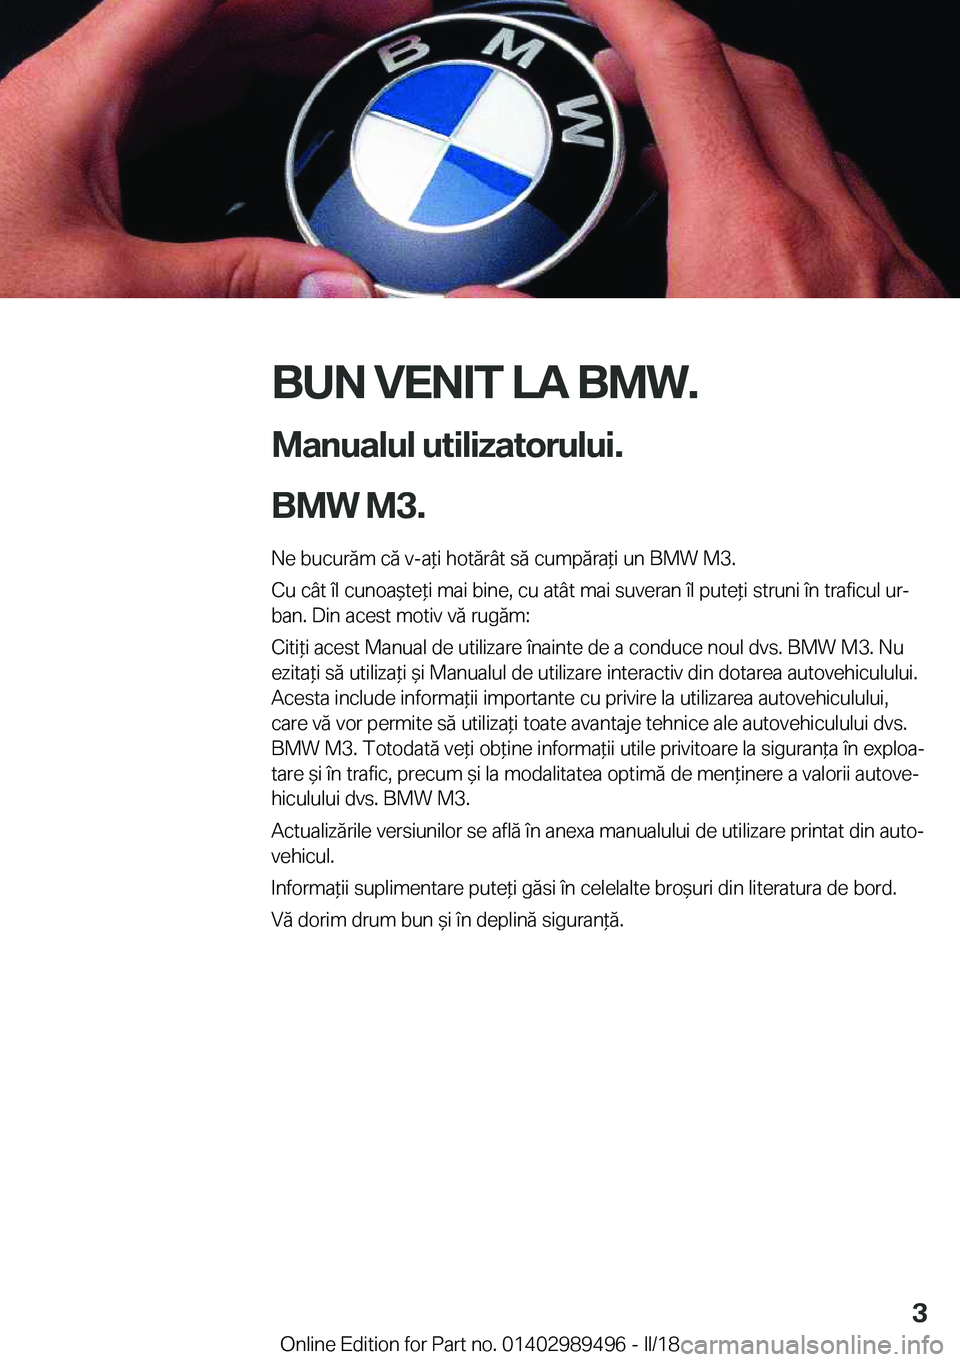 BMW M3 2018  Ghiduri De Utilizare (in Romanian) �B�U�N��V�E�N�I�T��L�A��B�M�W�.�M�a�n�u�a�l�u�l��u�t�i�l�i�z�a�t�o�r�u�l�u�i�.
�B�M�W��M�3�. �N�e� �b�u�c�u�r�